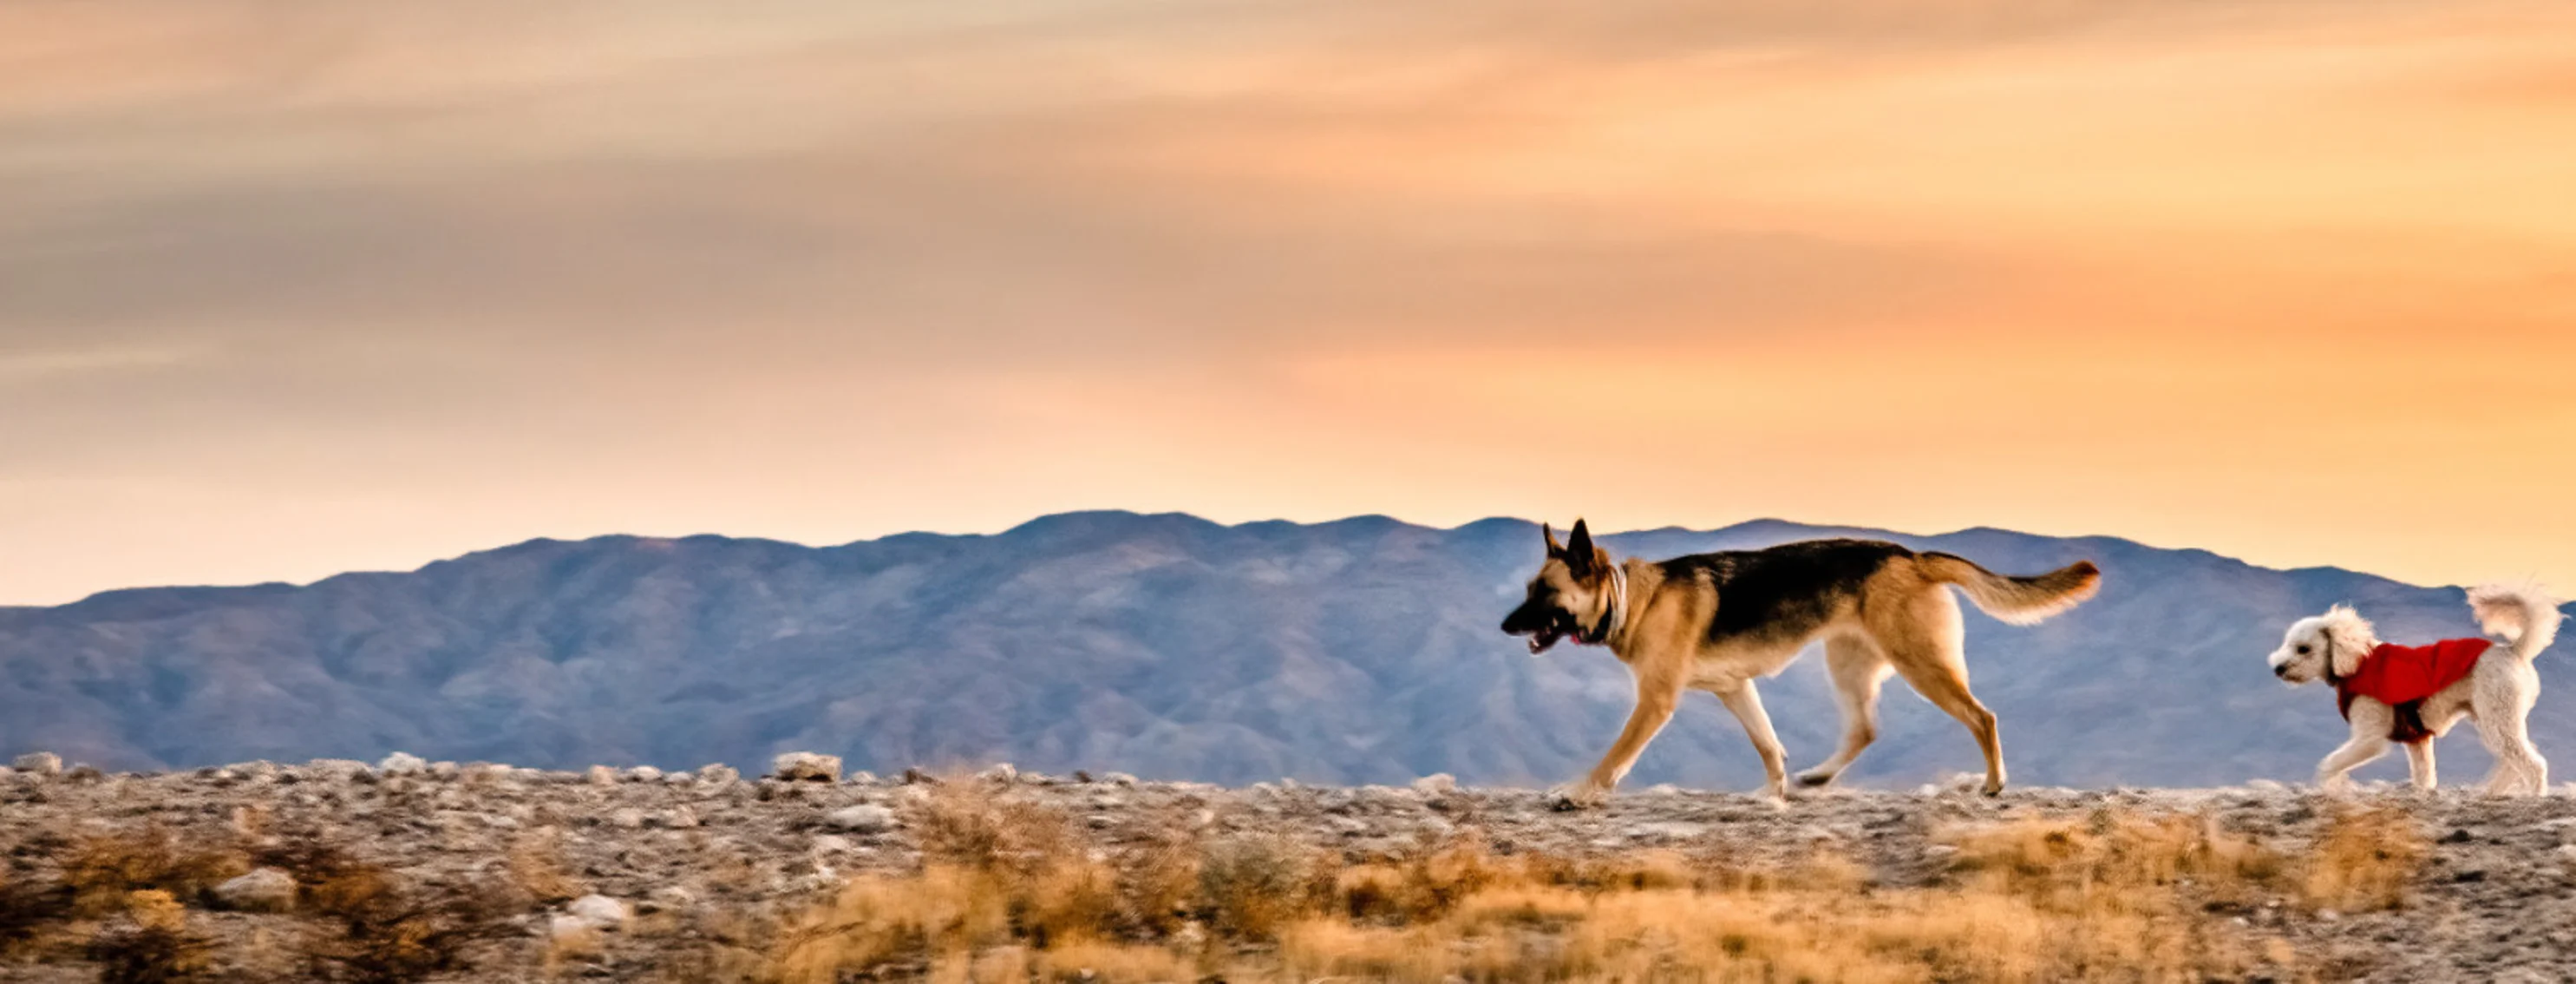 Two Dogs Walking in the Desert